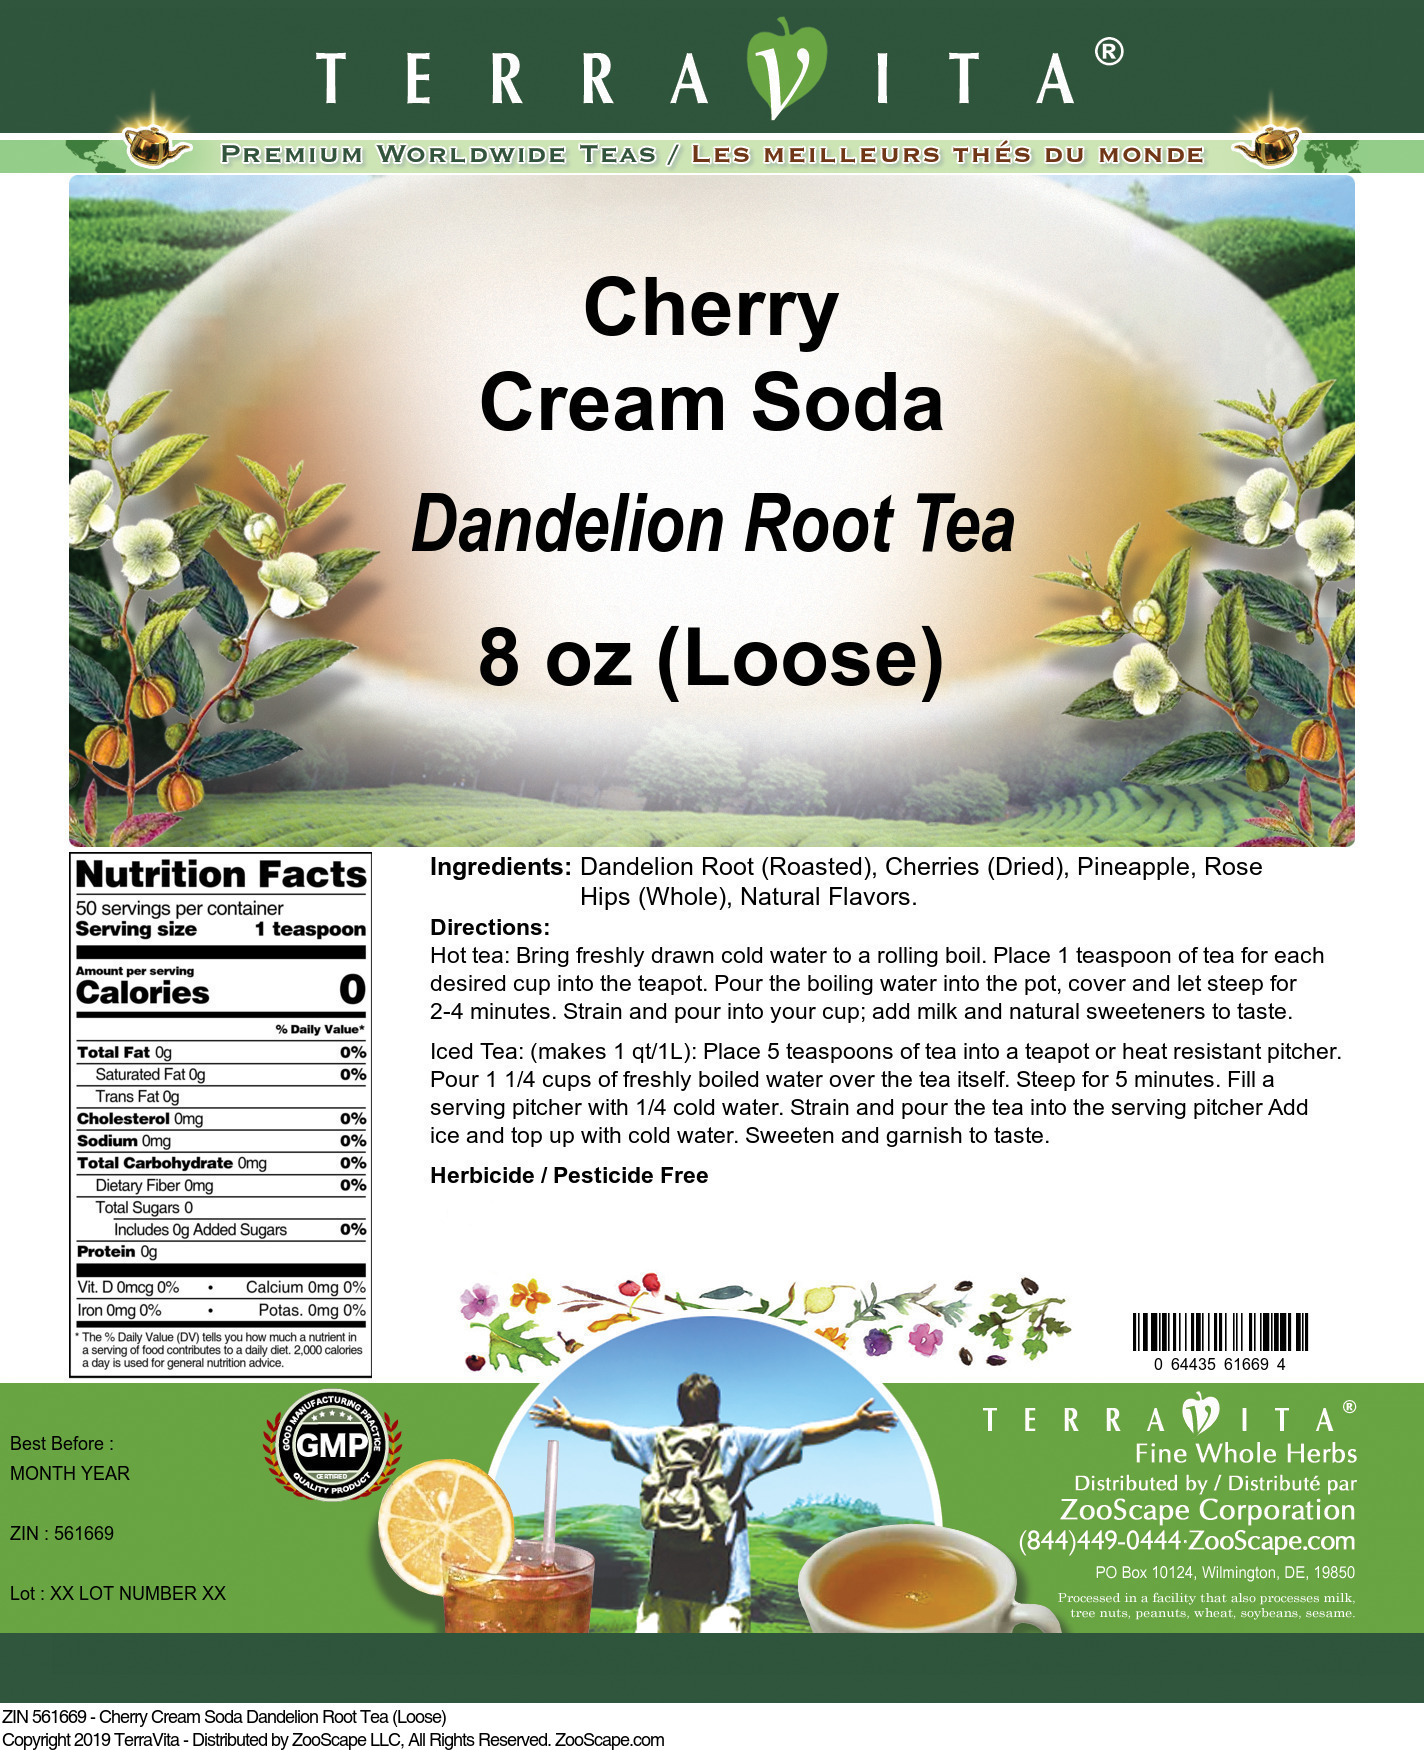 Cherry Cream Soda Dandelion Root Tea (Loose) - Label